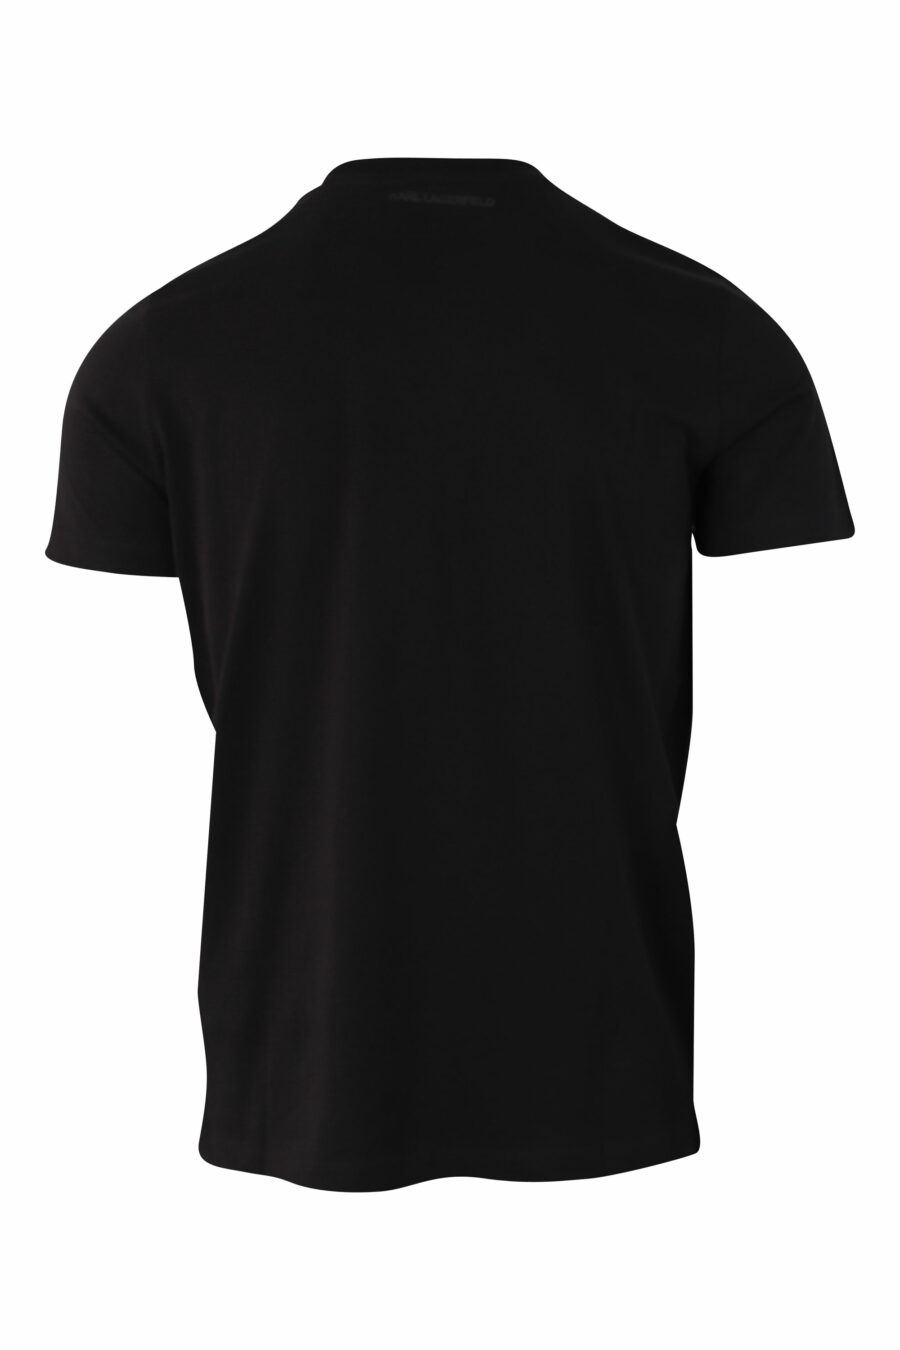 Camiseta negra con logo holográfico "rue st guillaume" - IMG 9827 1